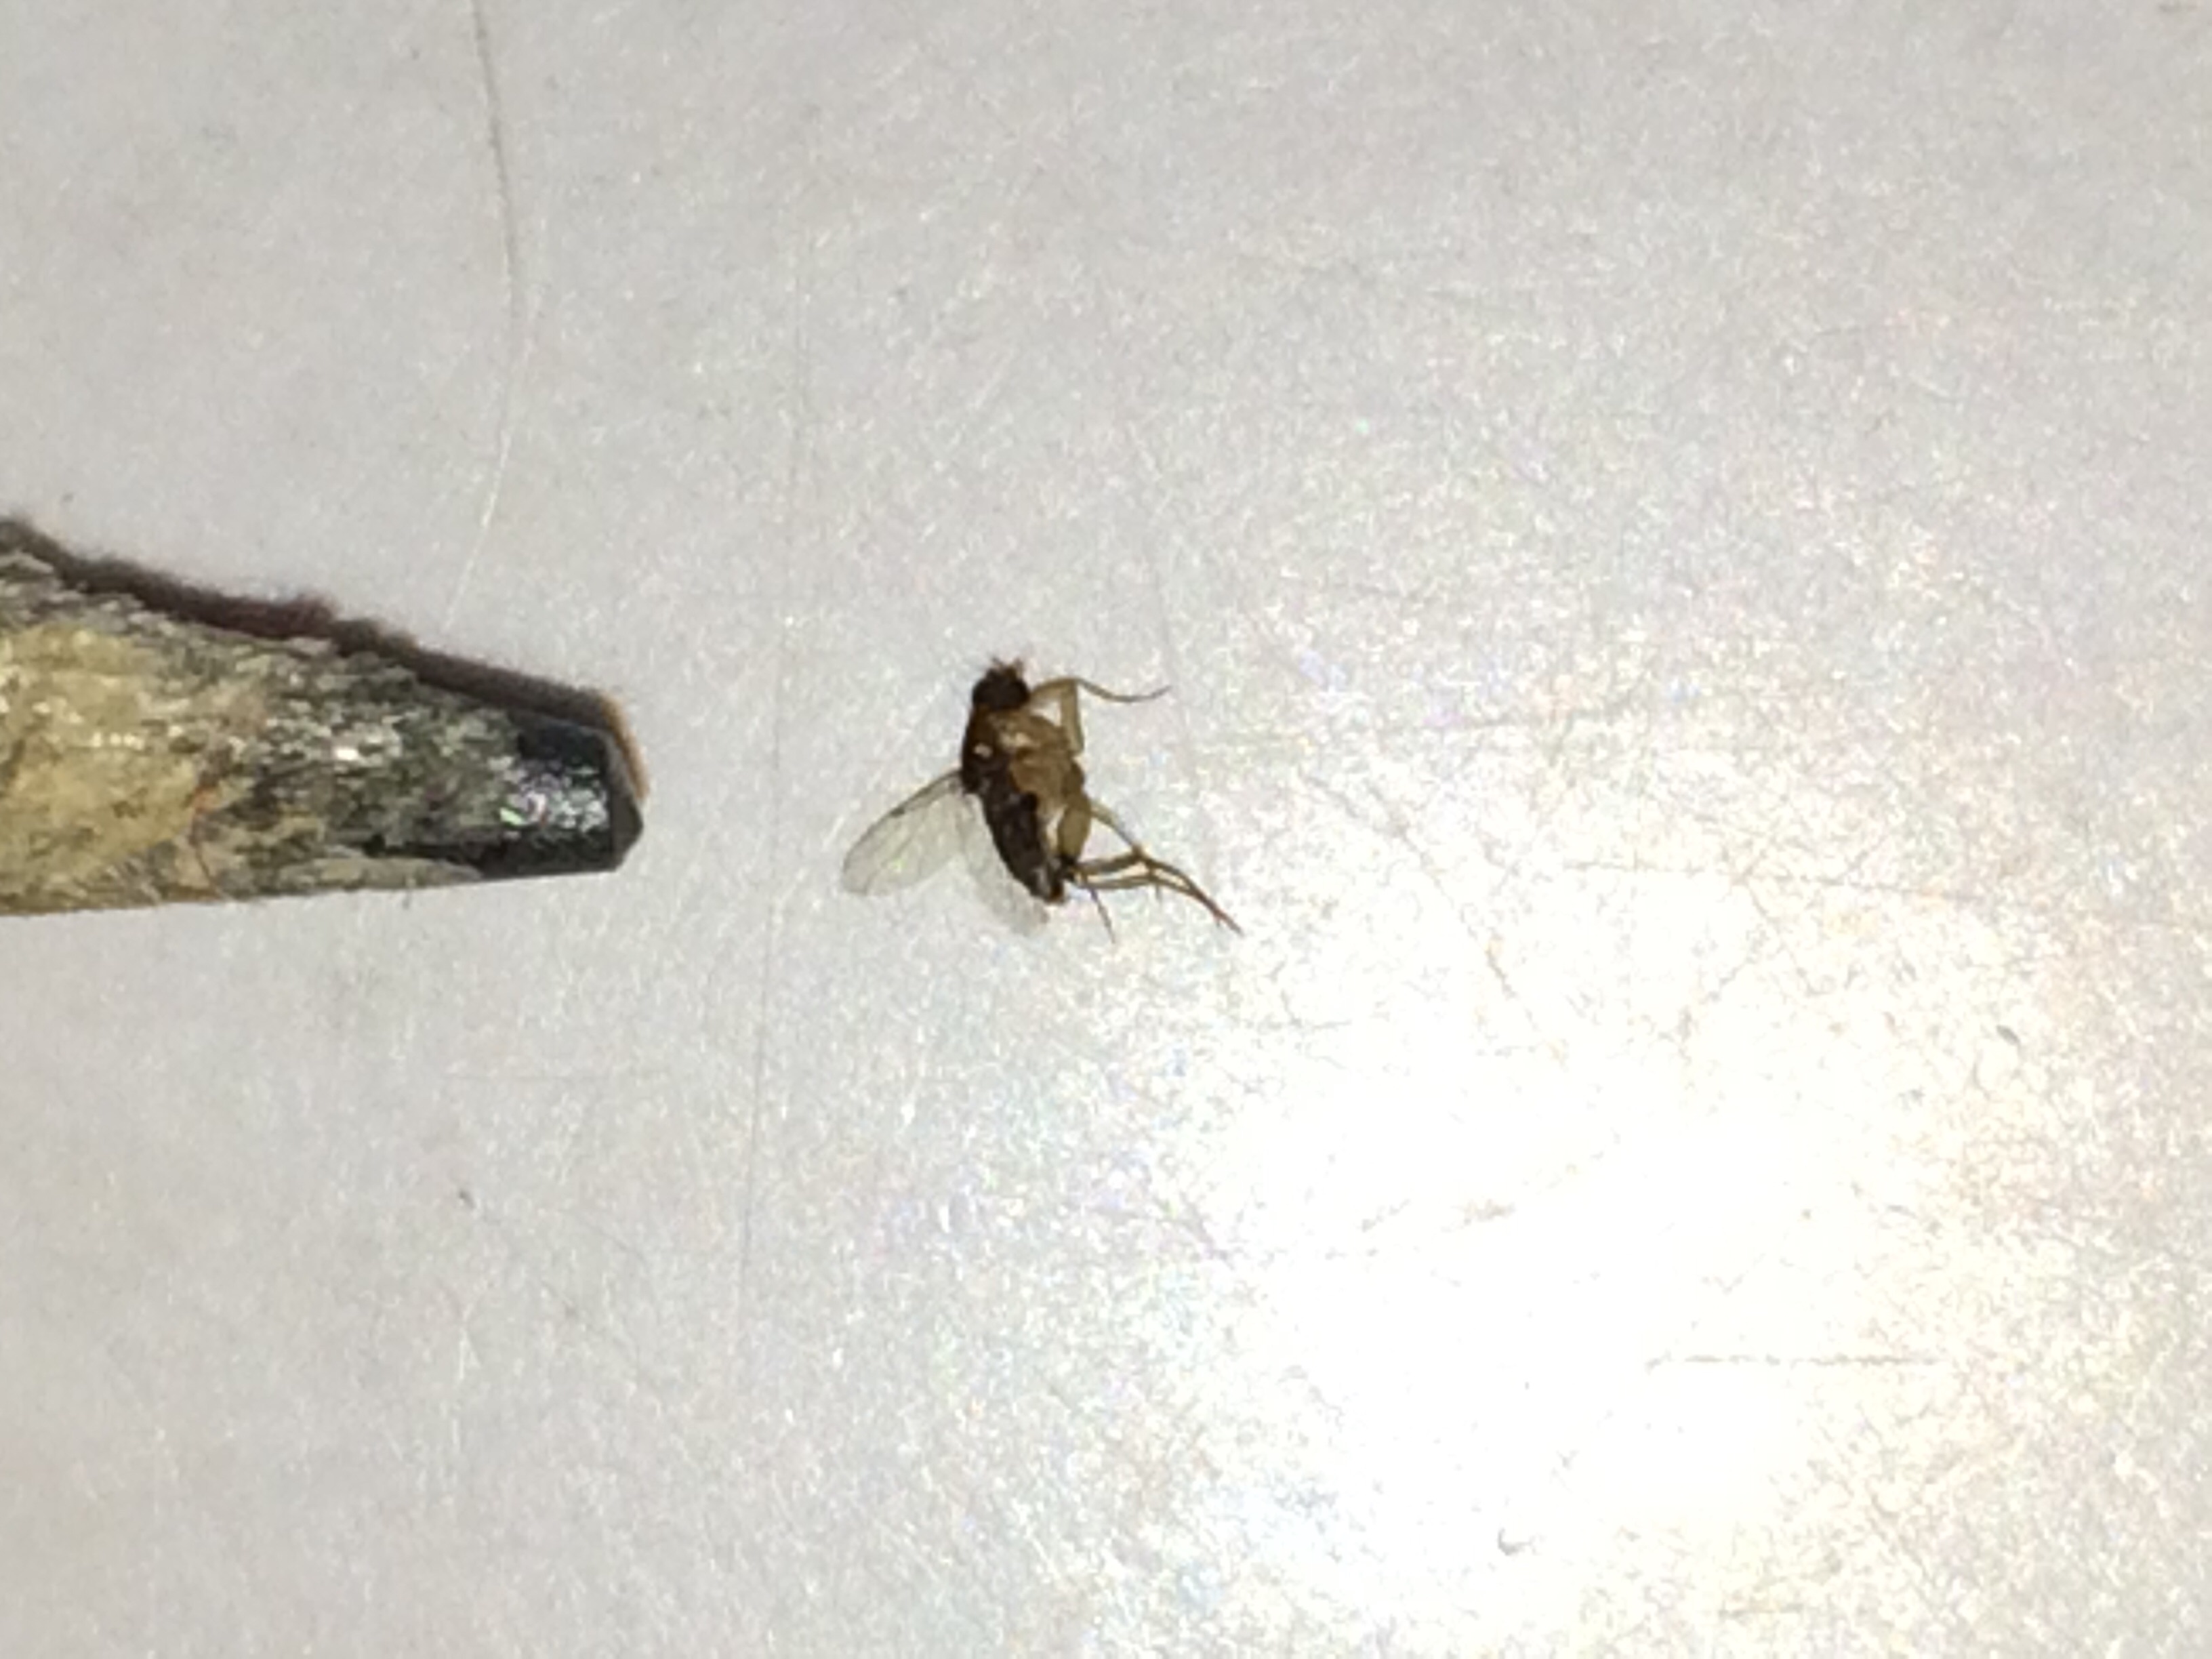 can regular flies come through the kitchen sink